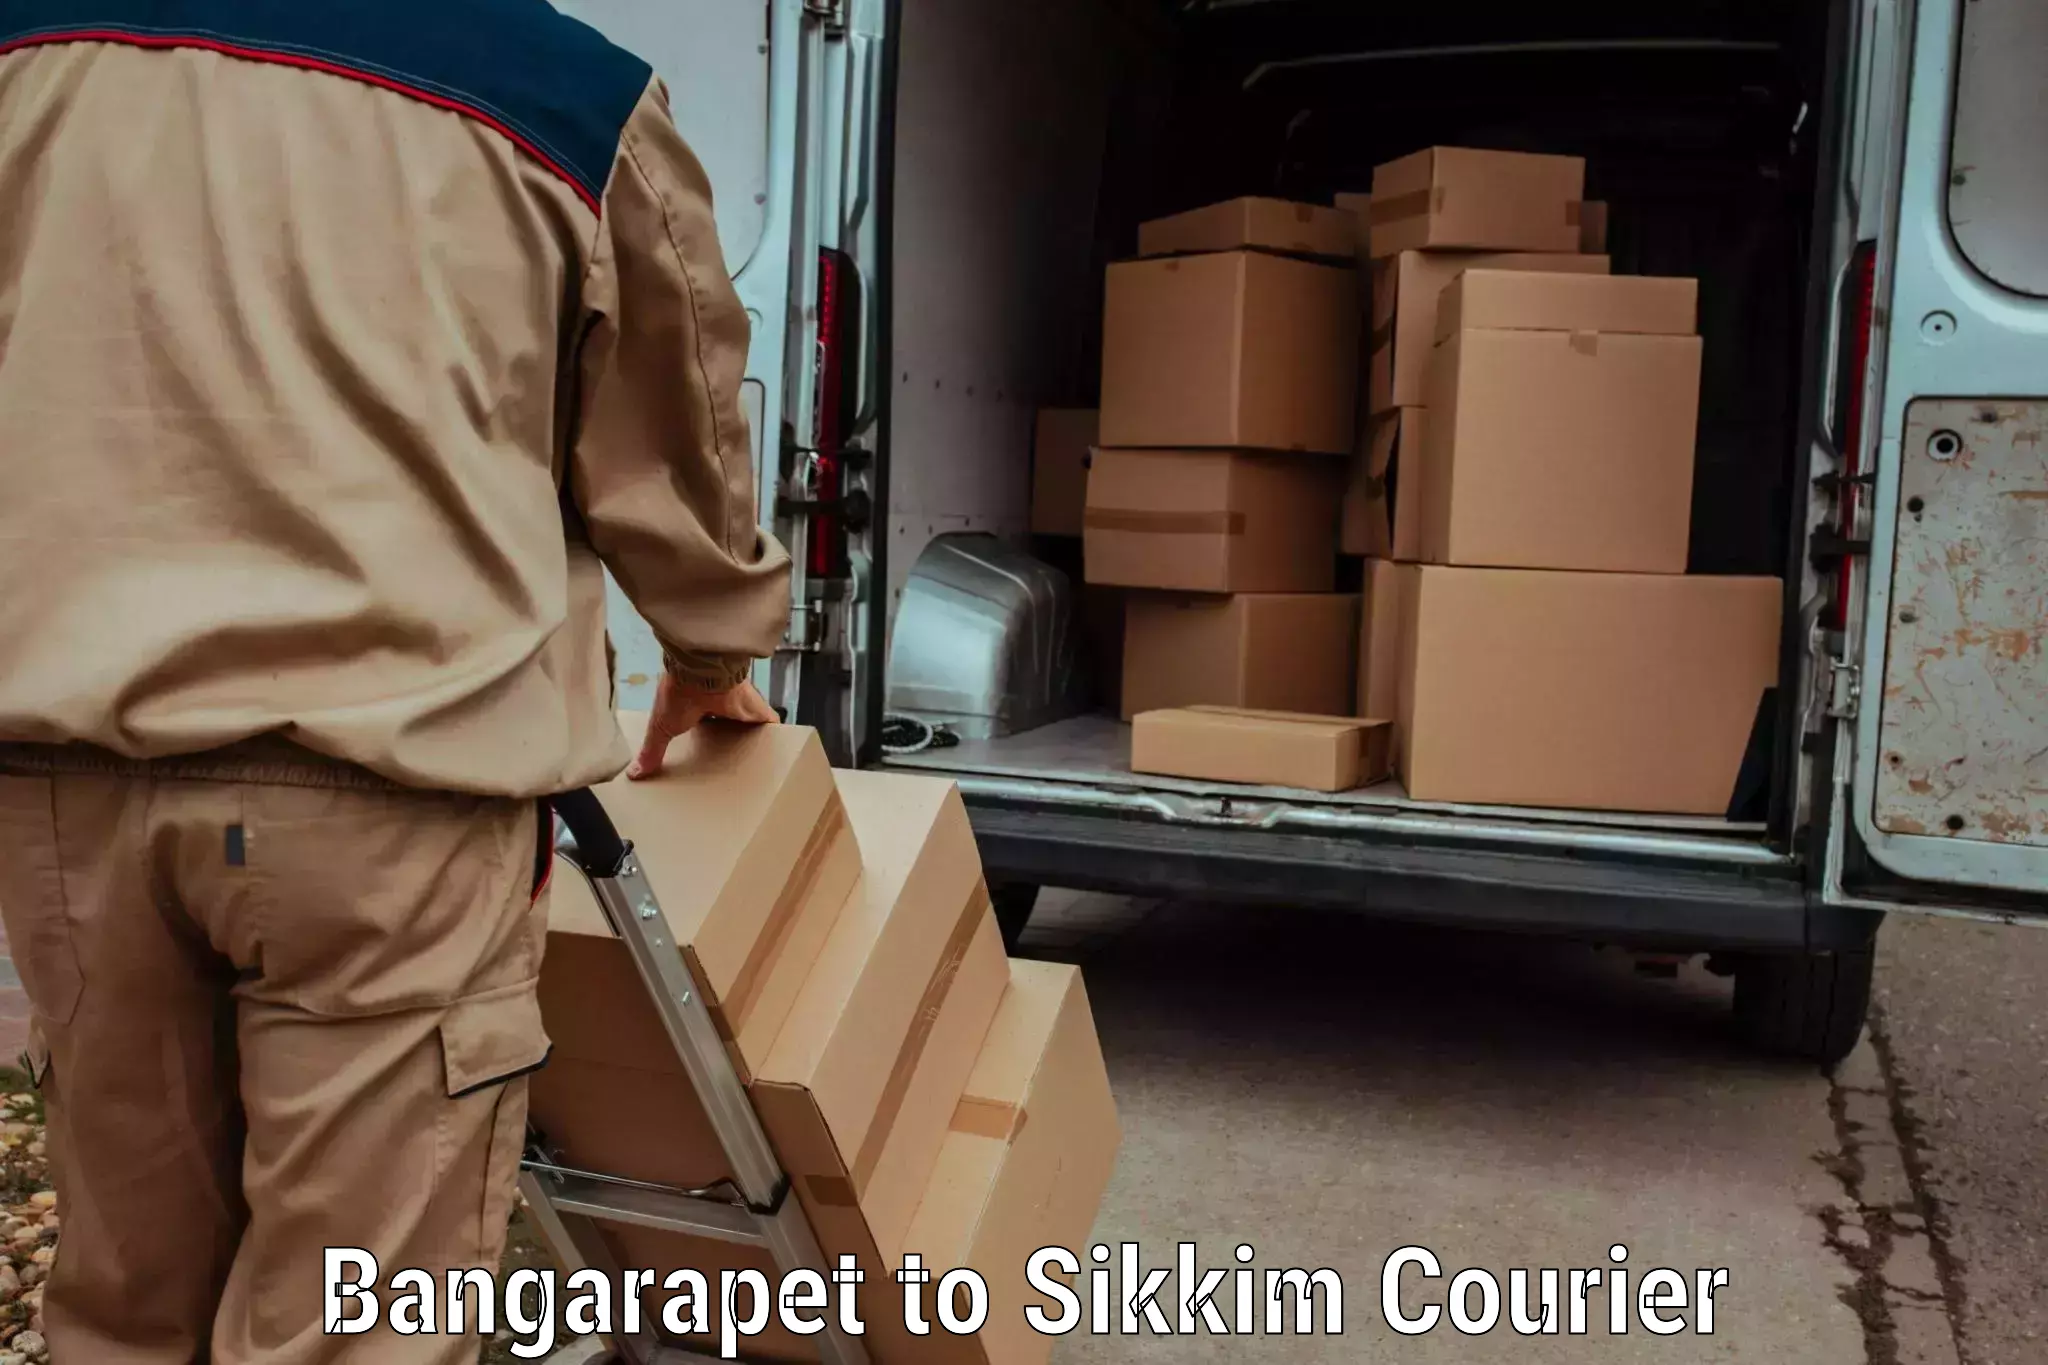 Professional courier handling Bangarapet to Pelling